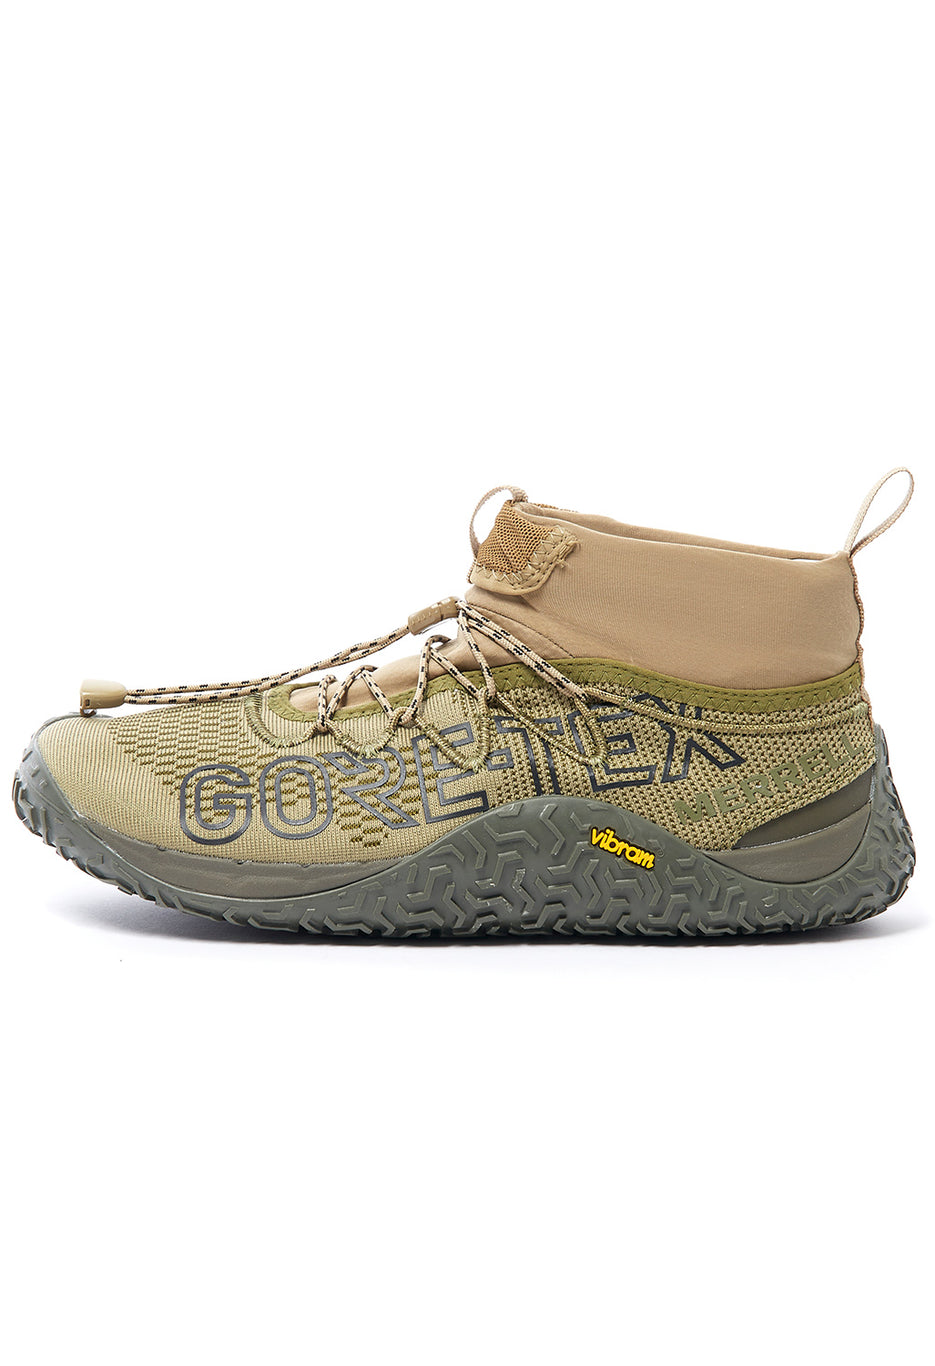 Merrell Trail Glove 7 GTX Shoes - Herb / Coyote